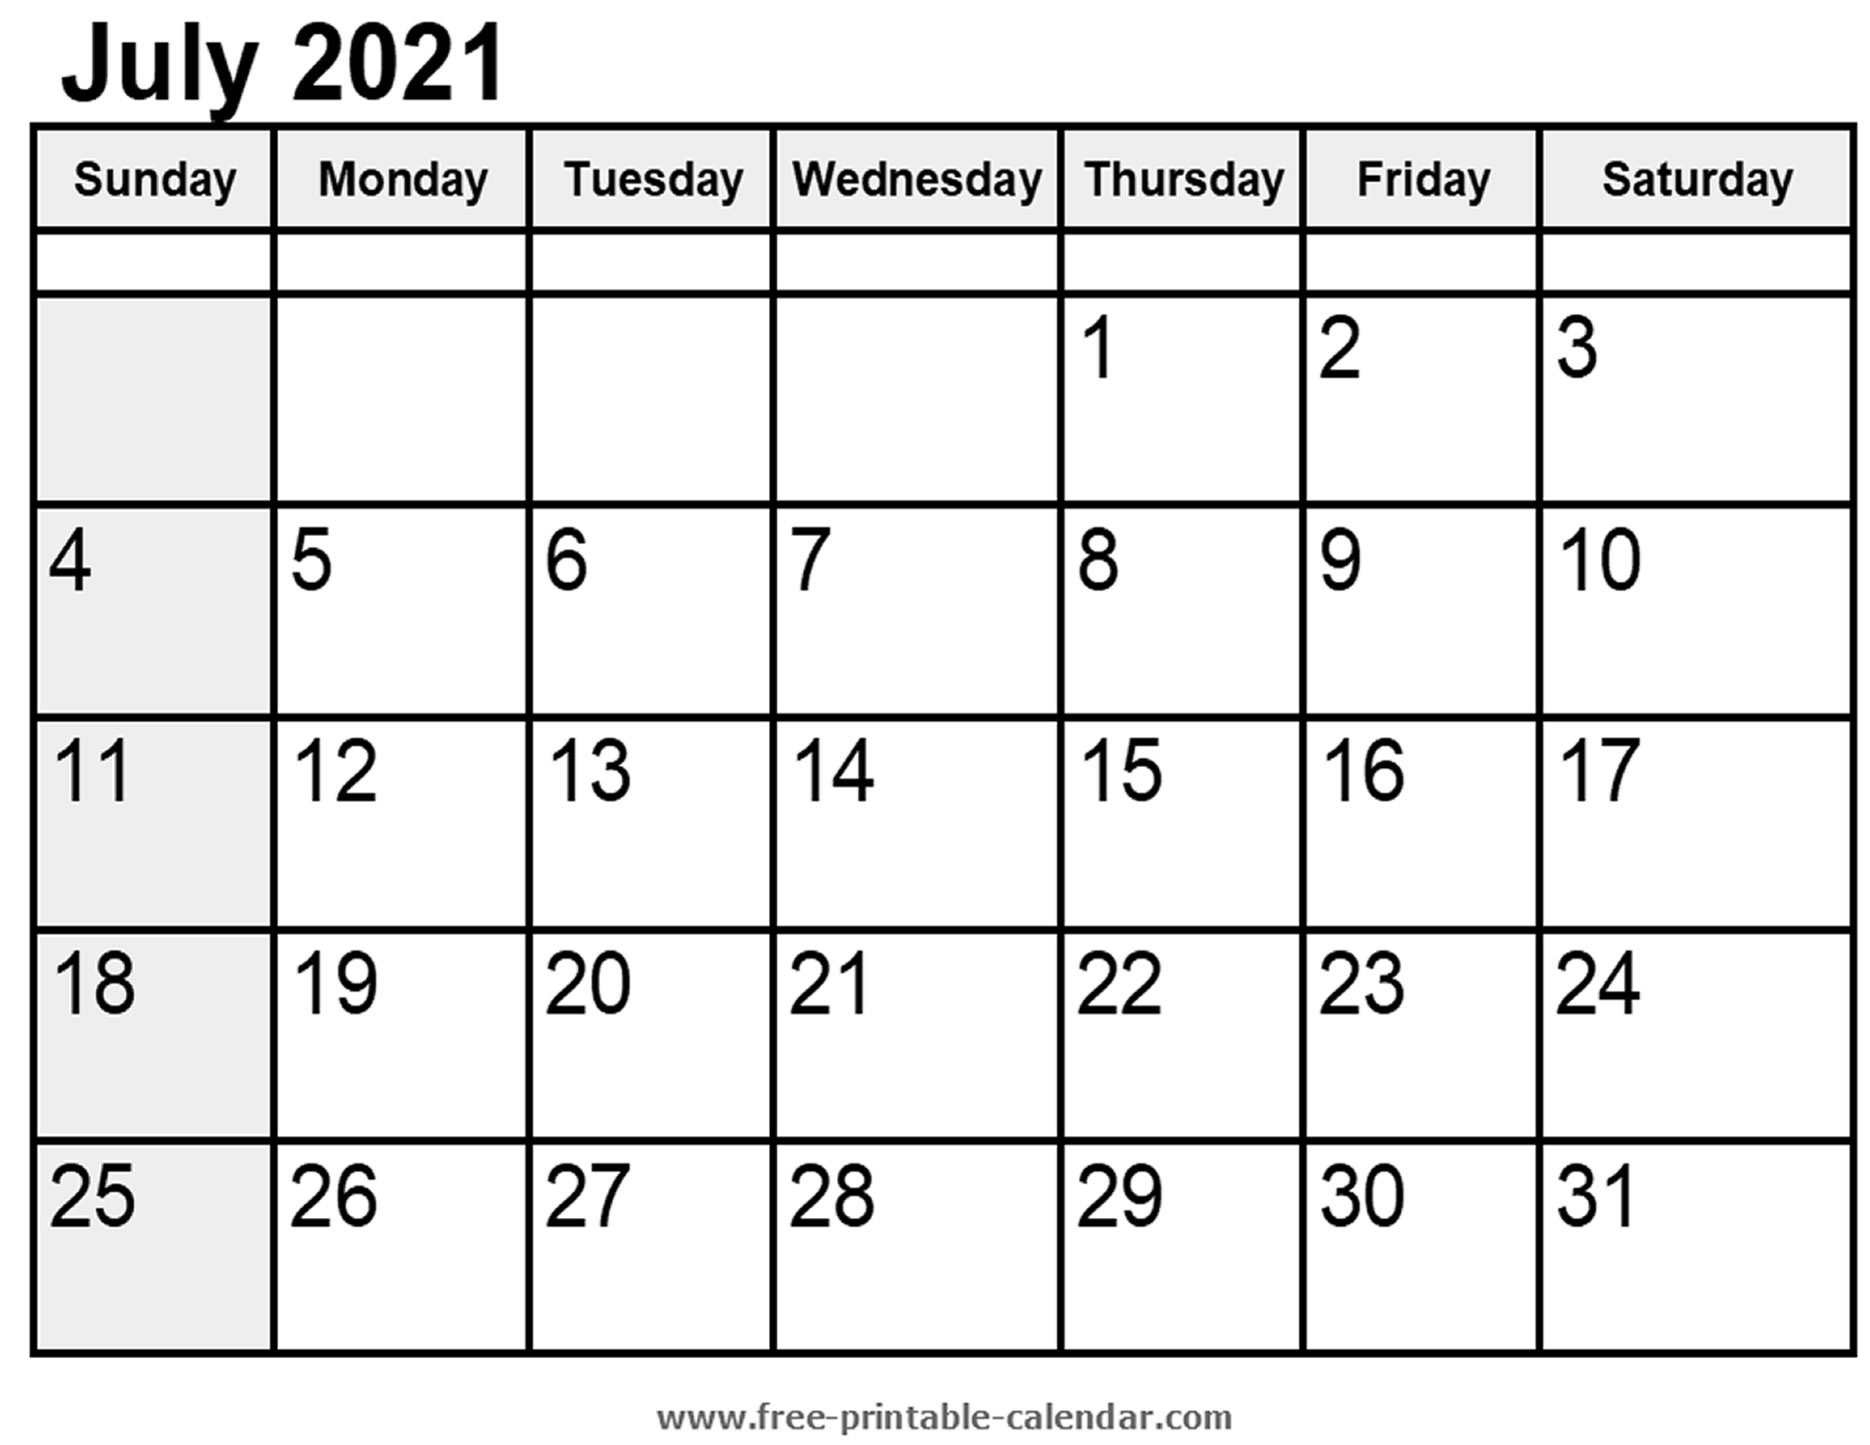 Calendar July 2021 - Free-Printable-Calendar July 2021 Calendar Free Printable